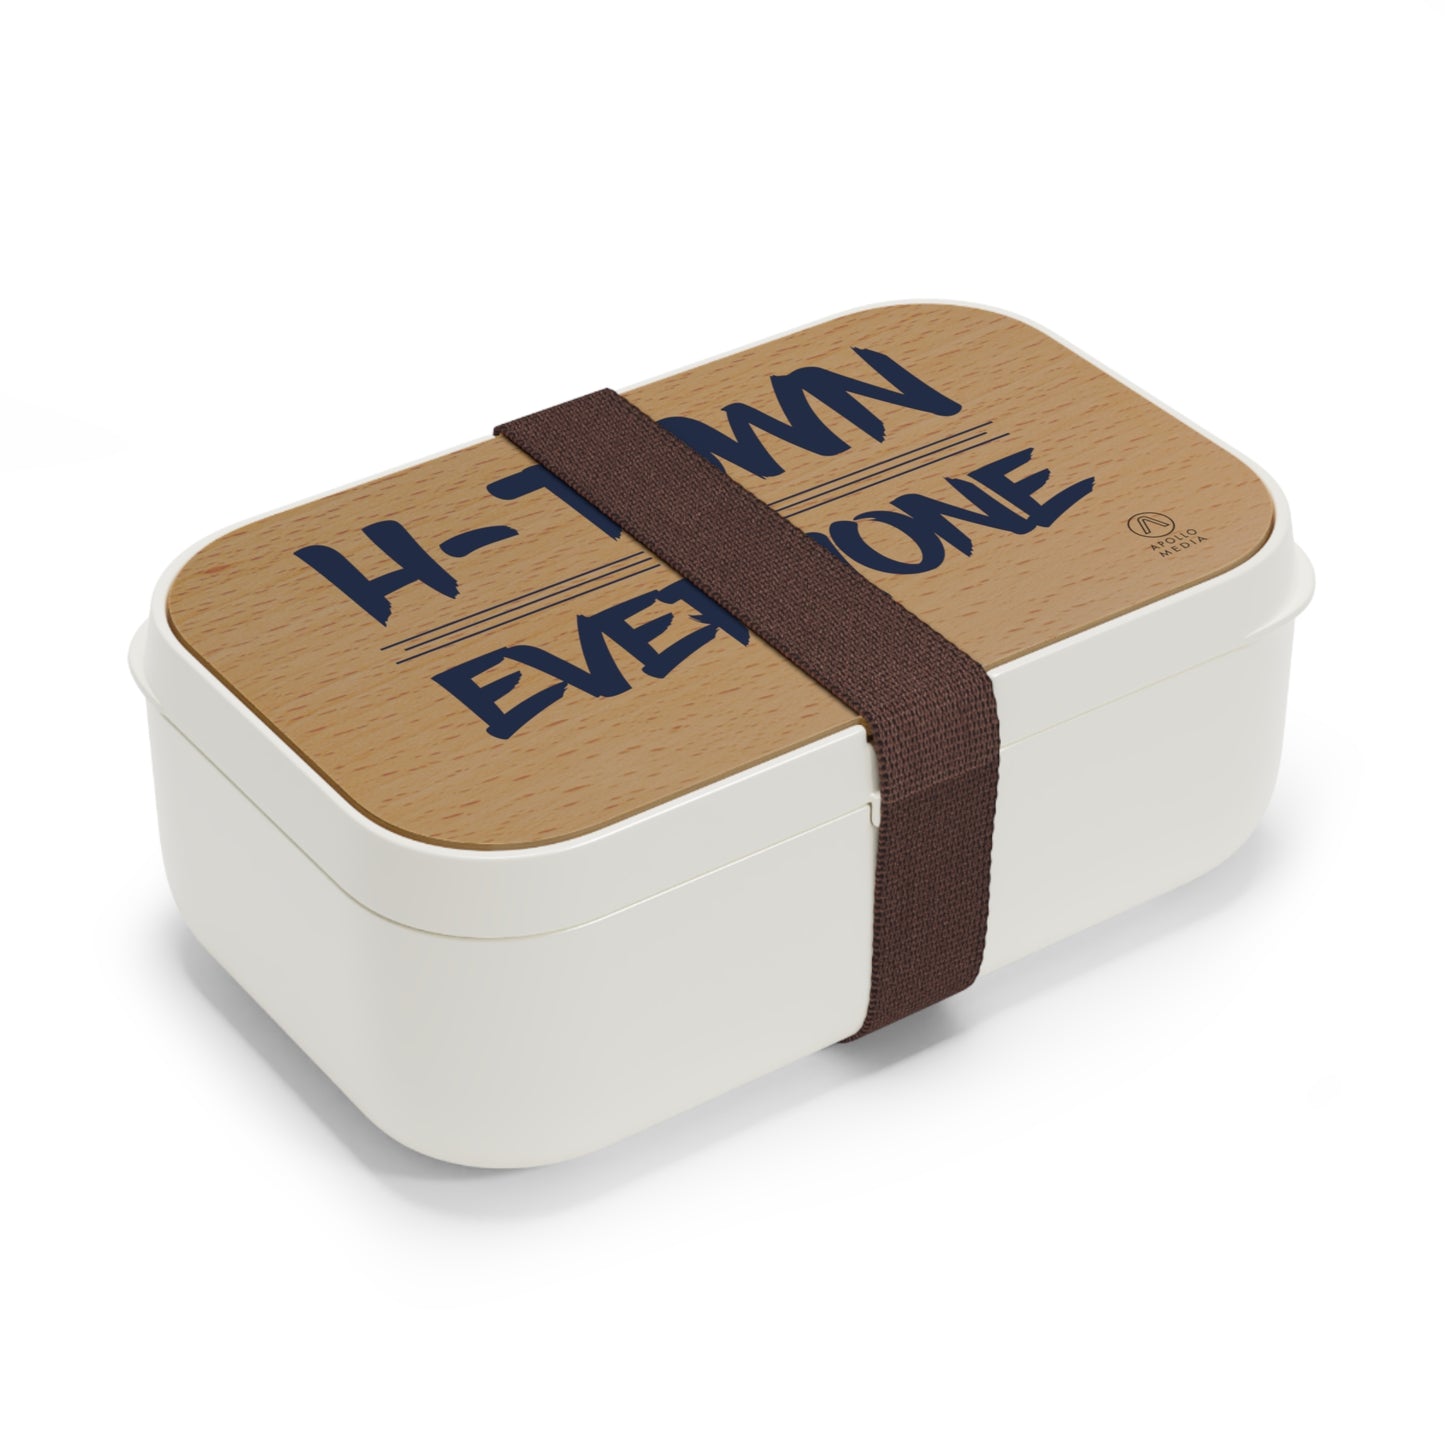 H-Town vs Everyone Bento Lunch Box